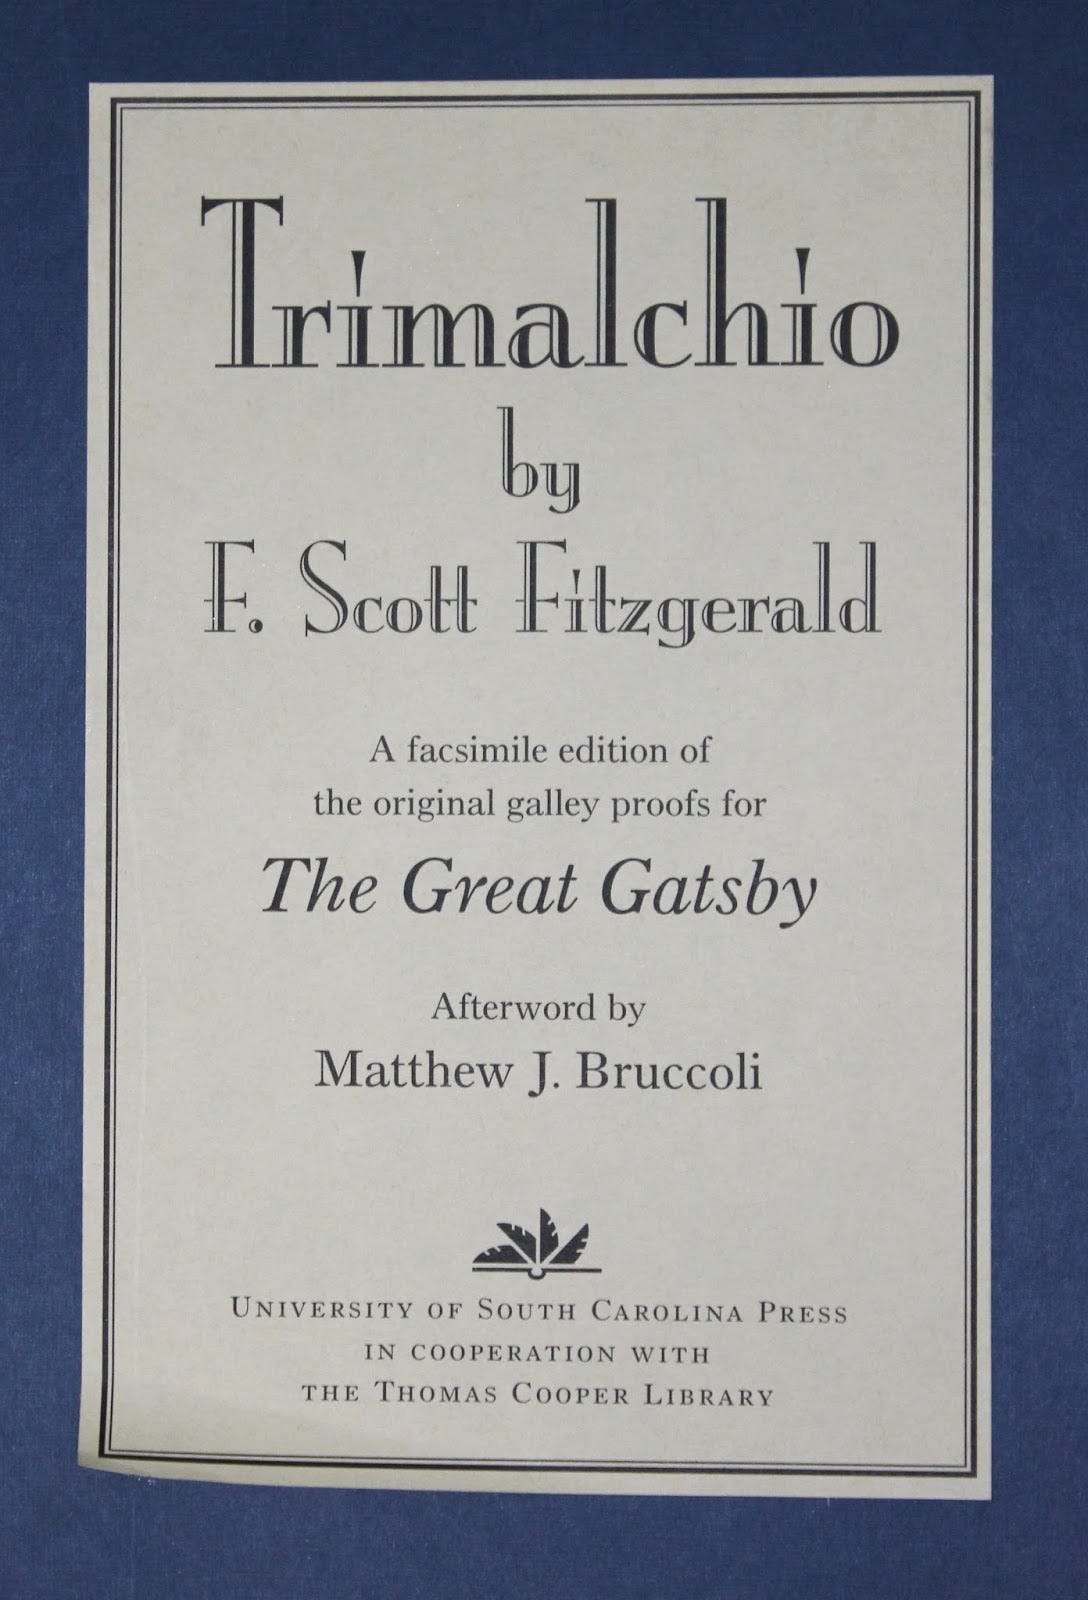 Trimalchio by F. Scott Fitzgerald